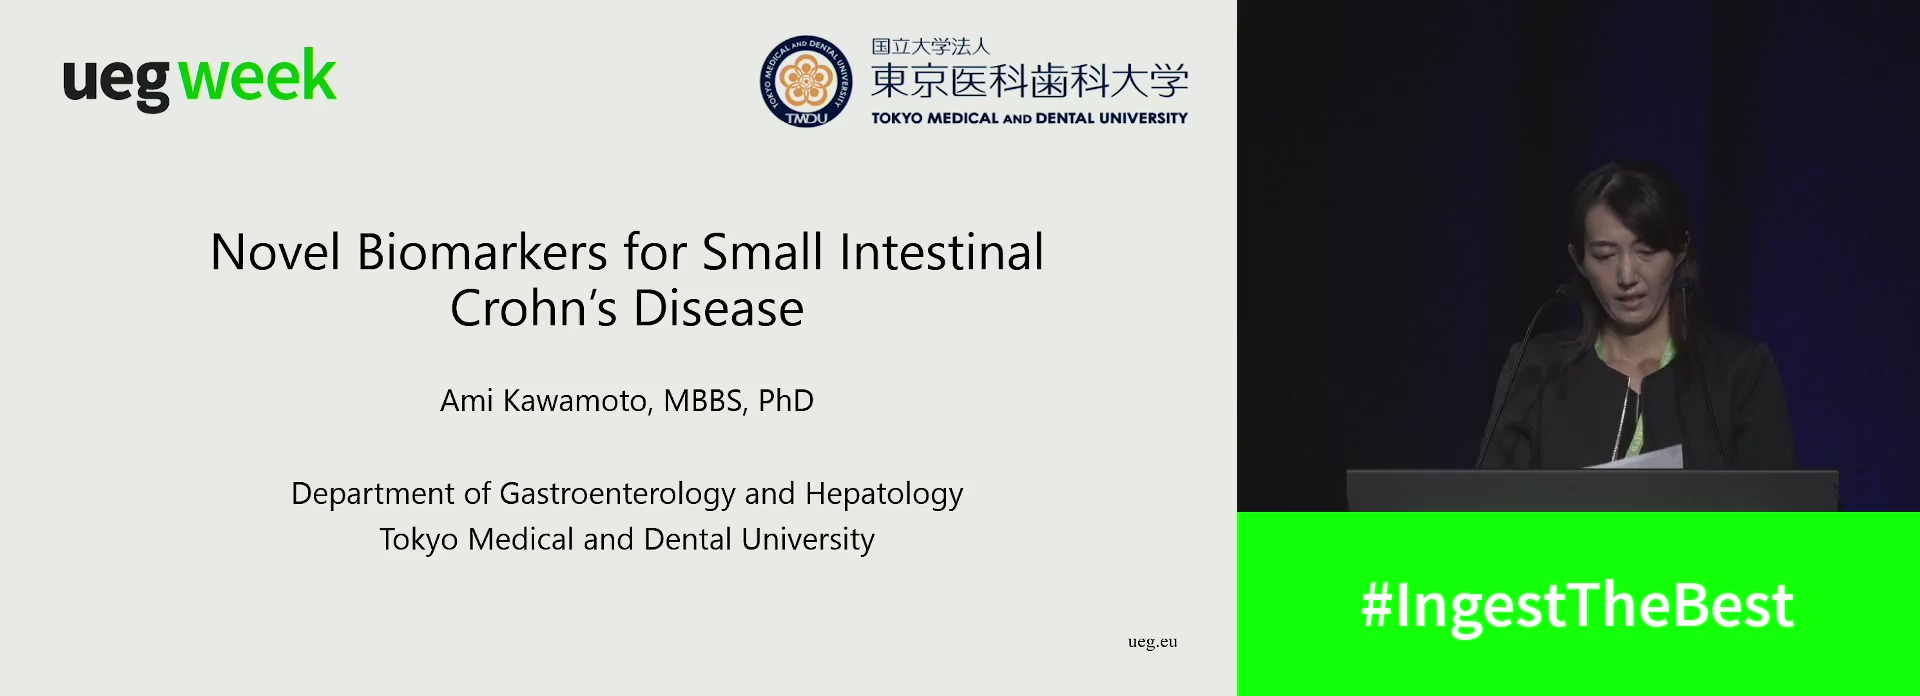 Novel biomarkers for small intestinal Crohn's disease